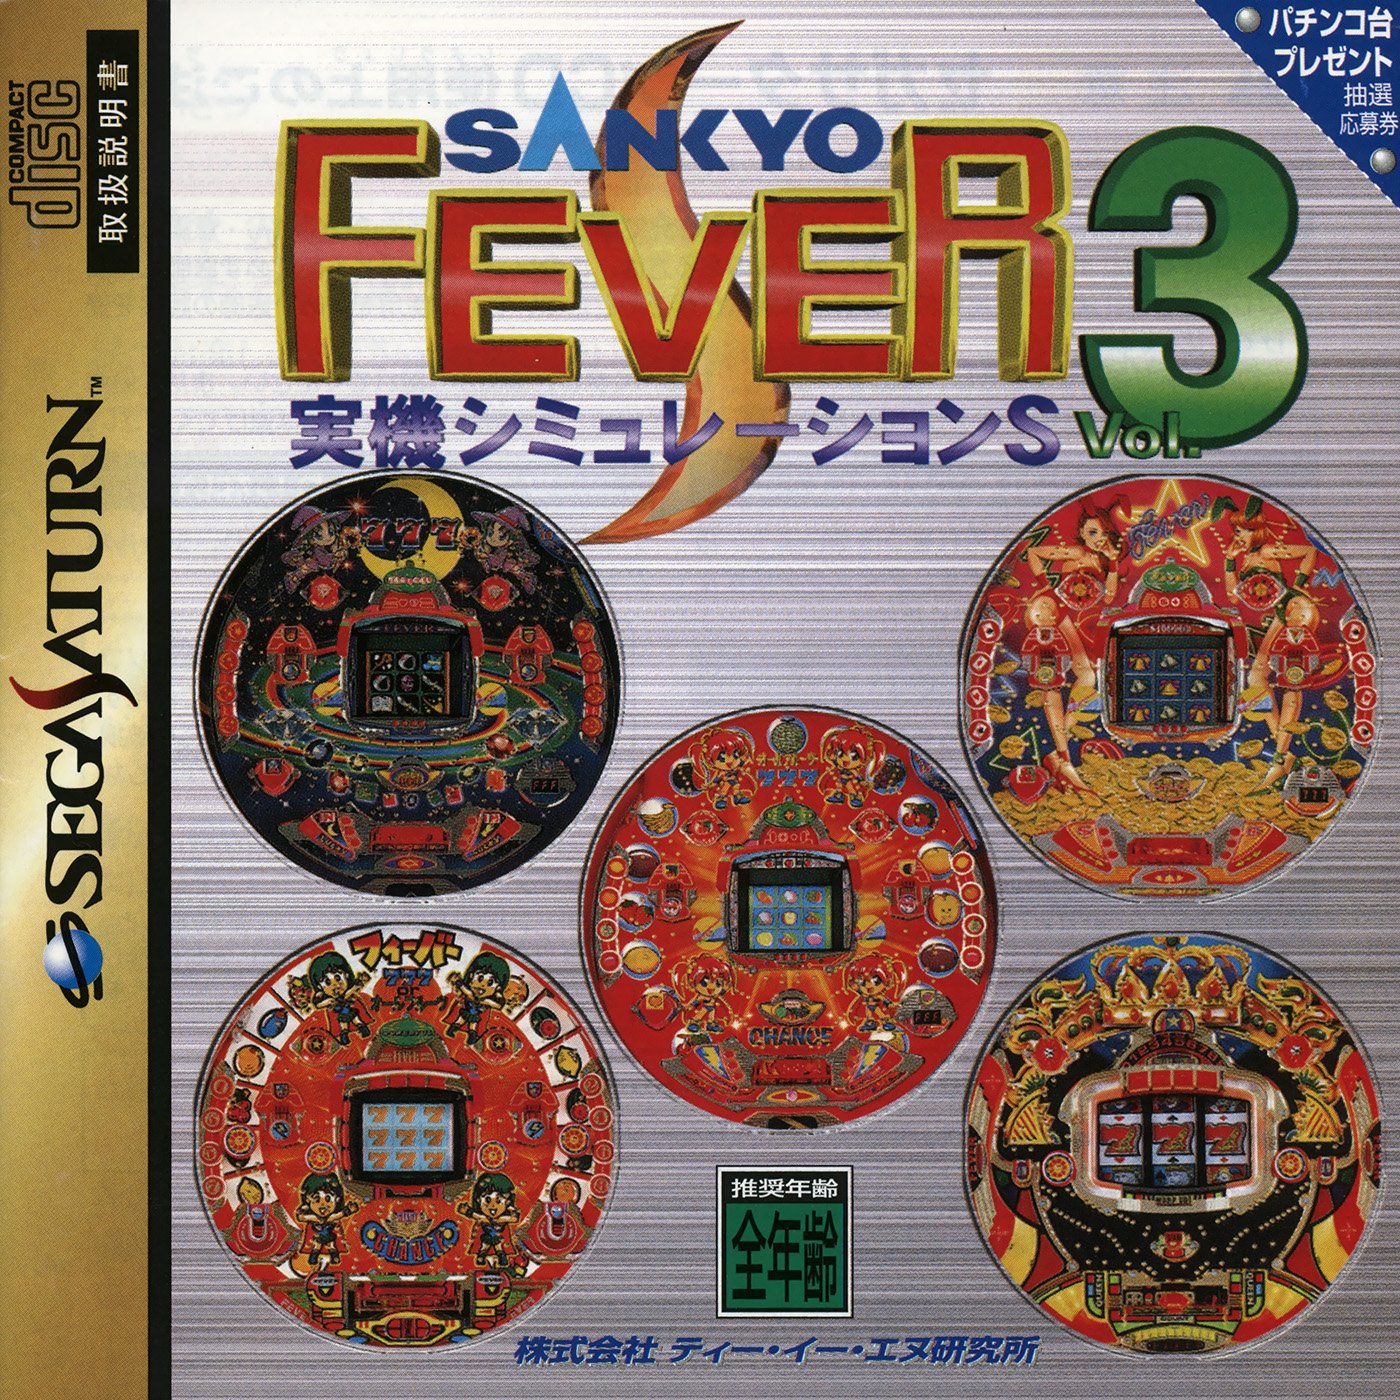 Sankyo Fever: Jikki Simulation S Vol. 3